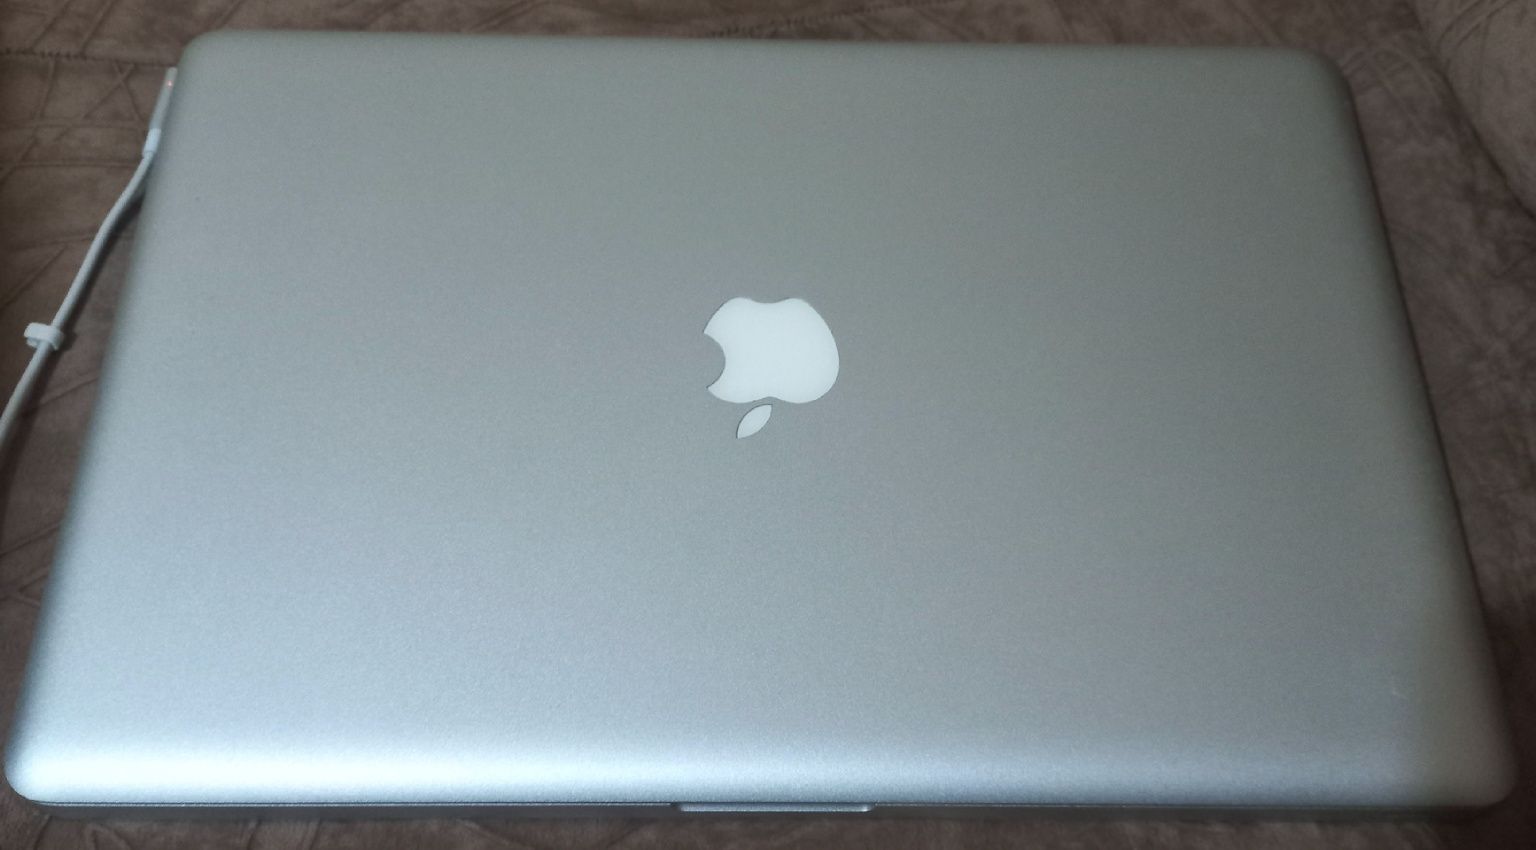 Перфектен Macbook Pro a1286 2011